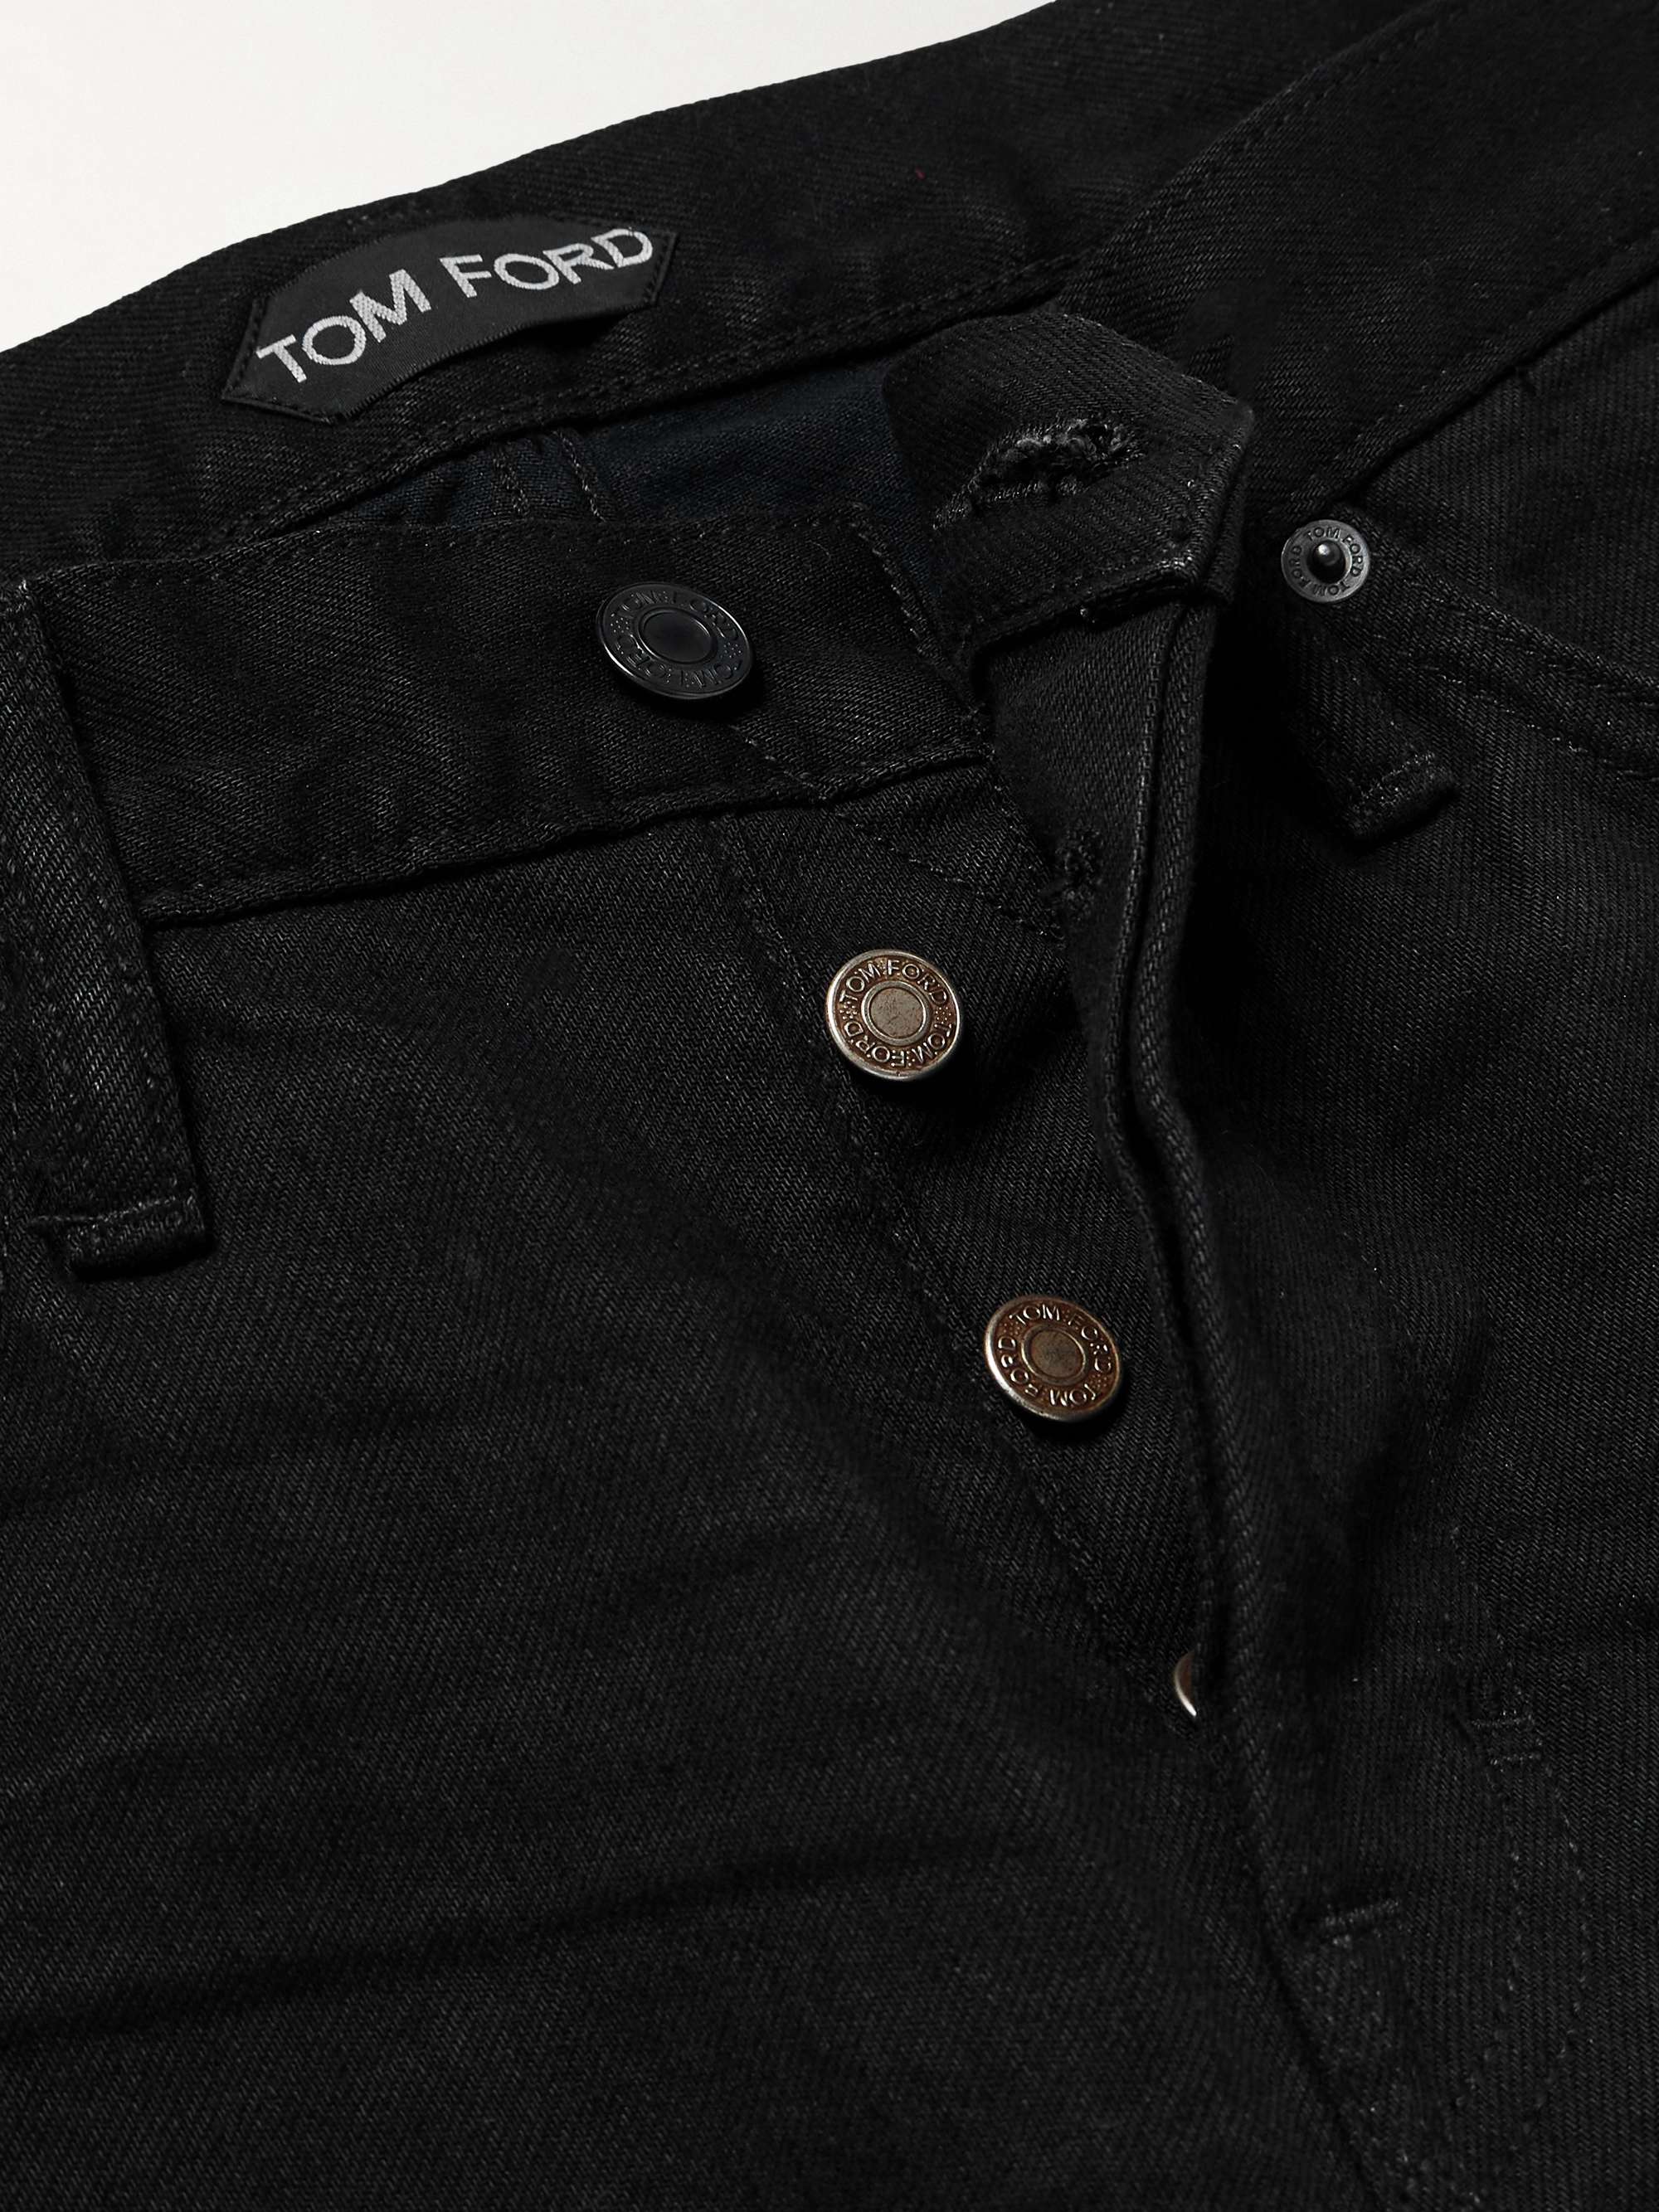 TOM FORD Slim-Fit Selvedge Jeans for Men | MR PORTER